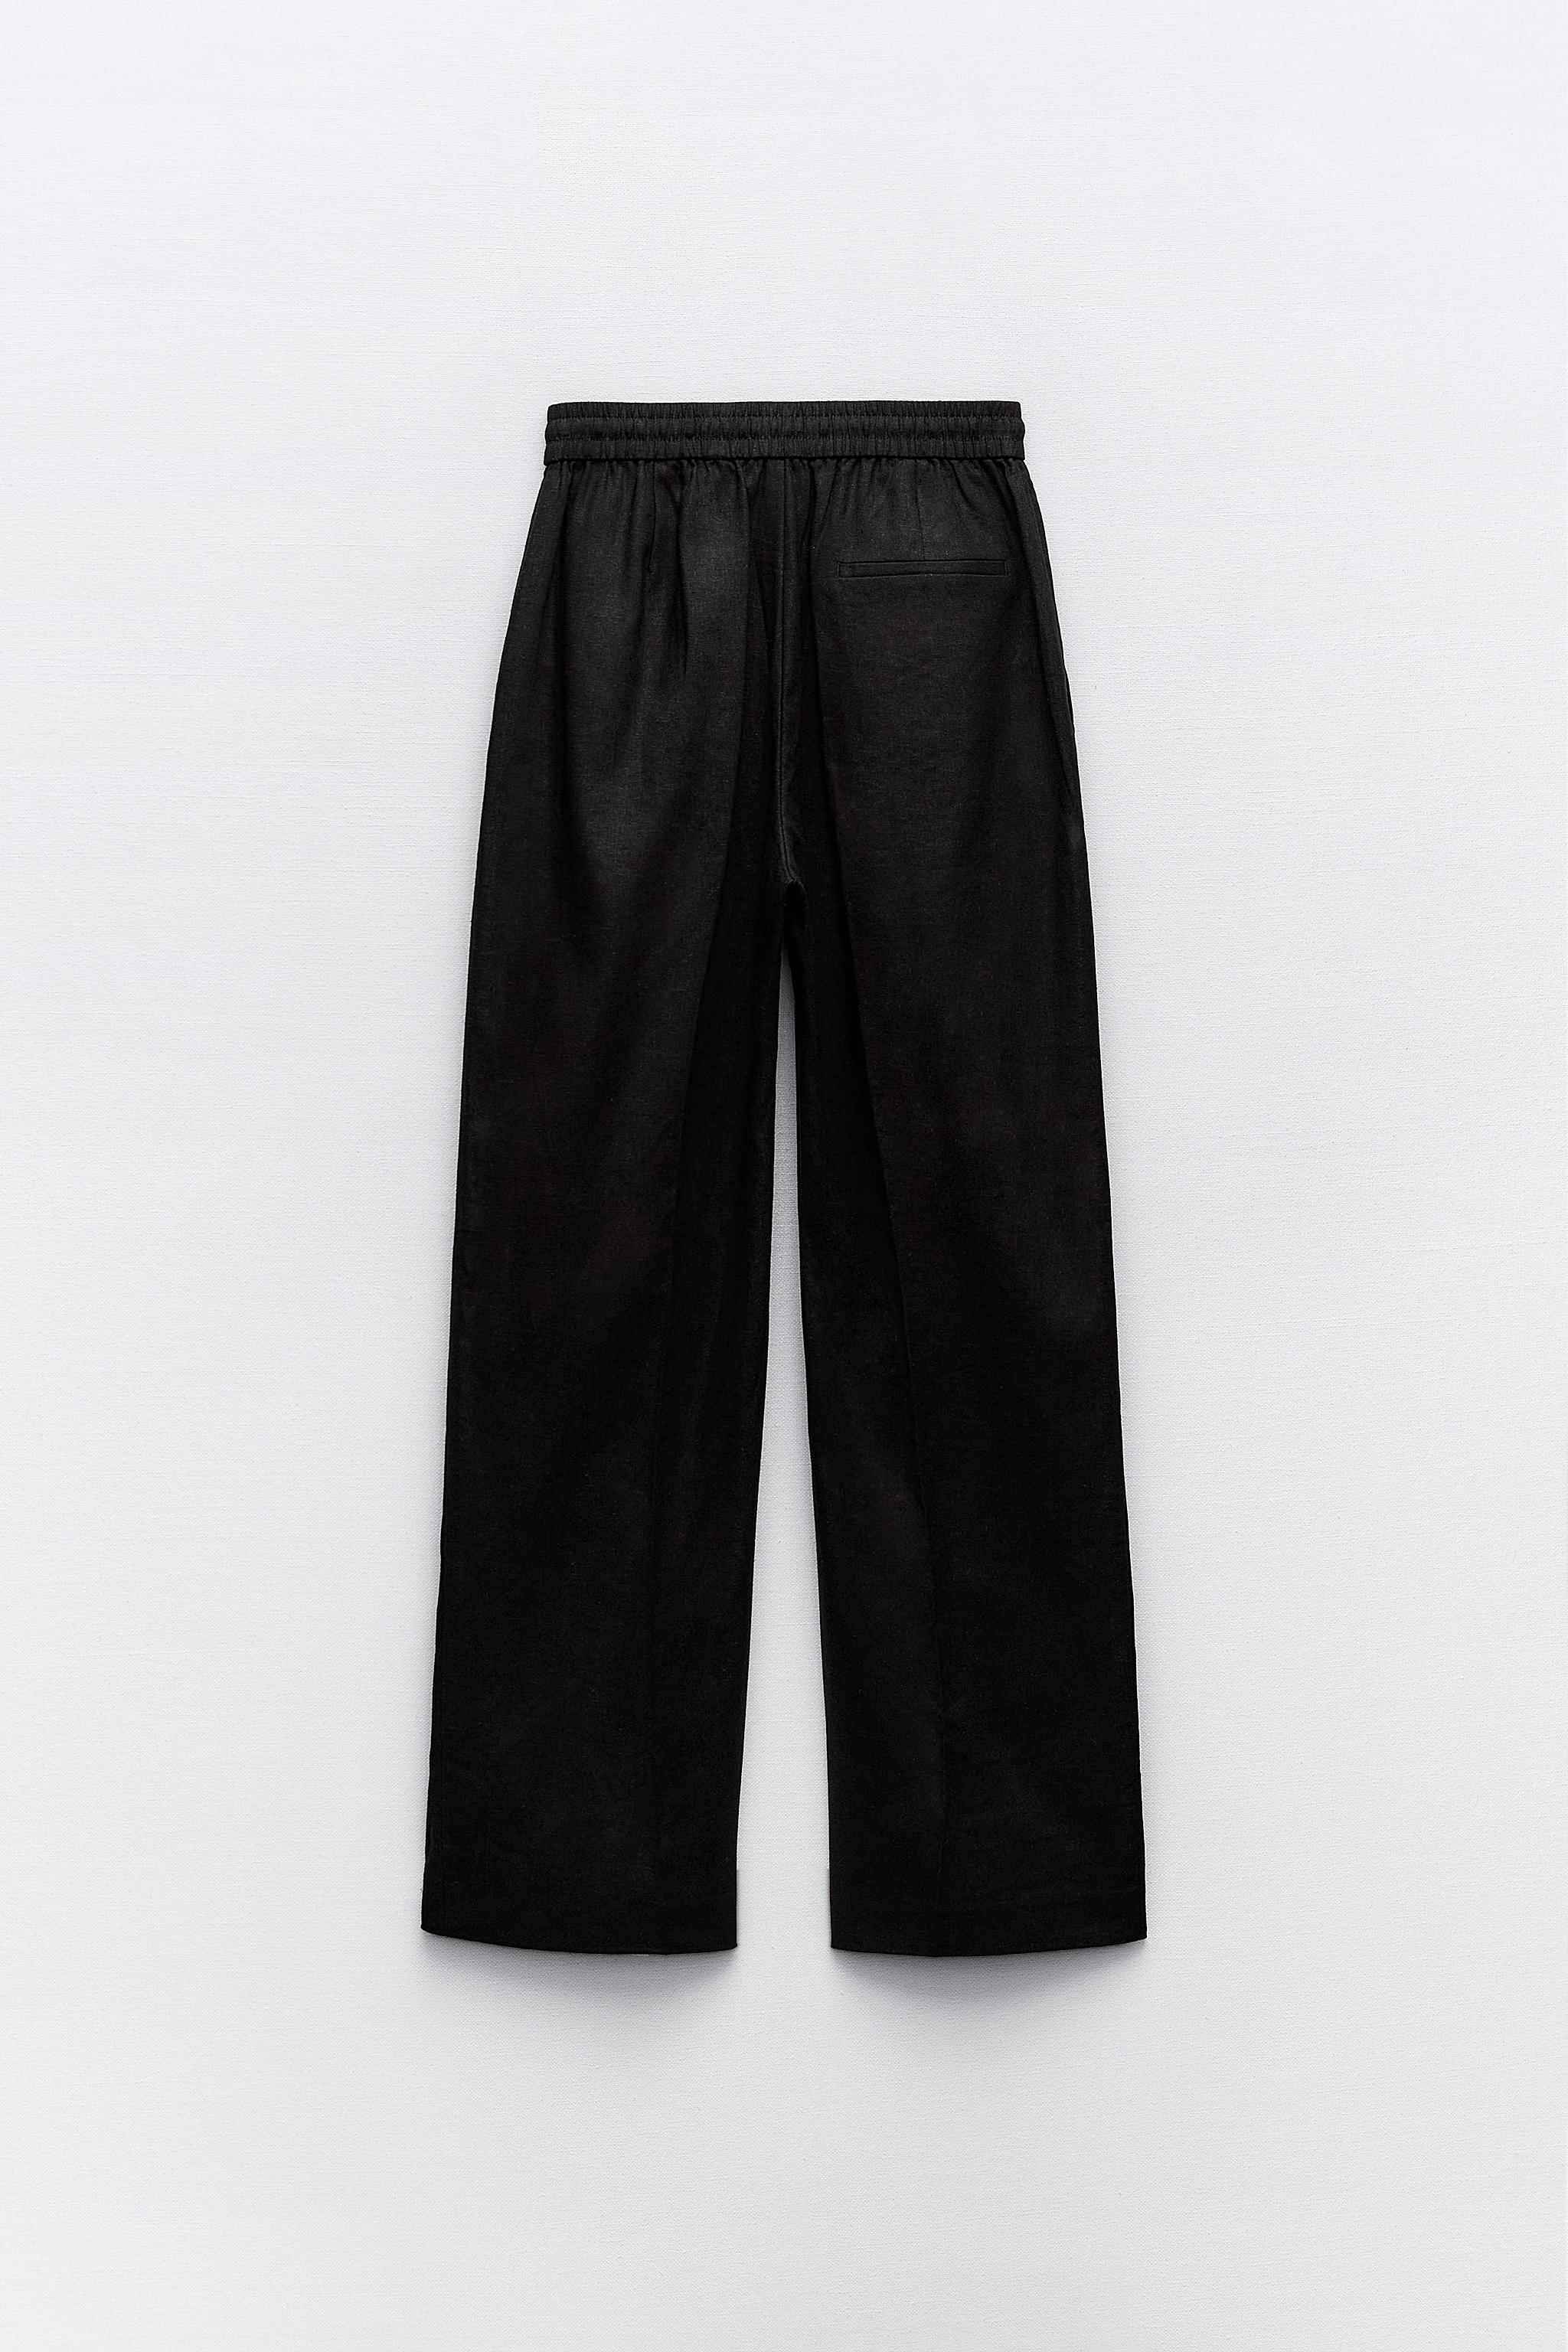 Cotton , Linen Trousers 106, Burda Style 07/21 July 2021